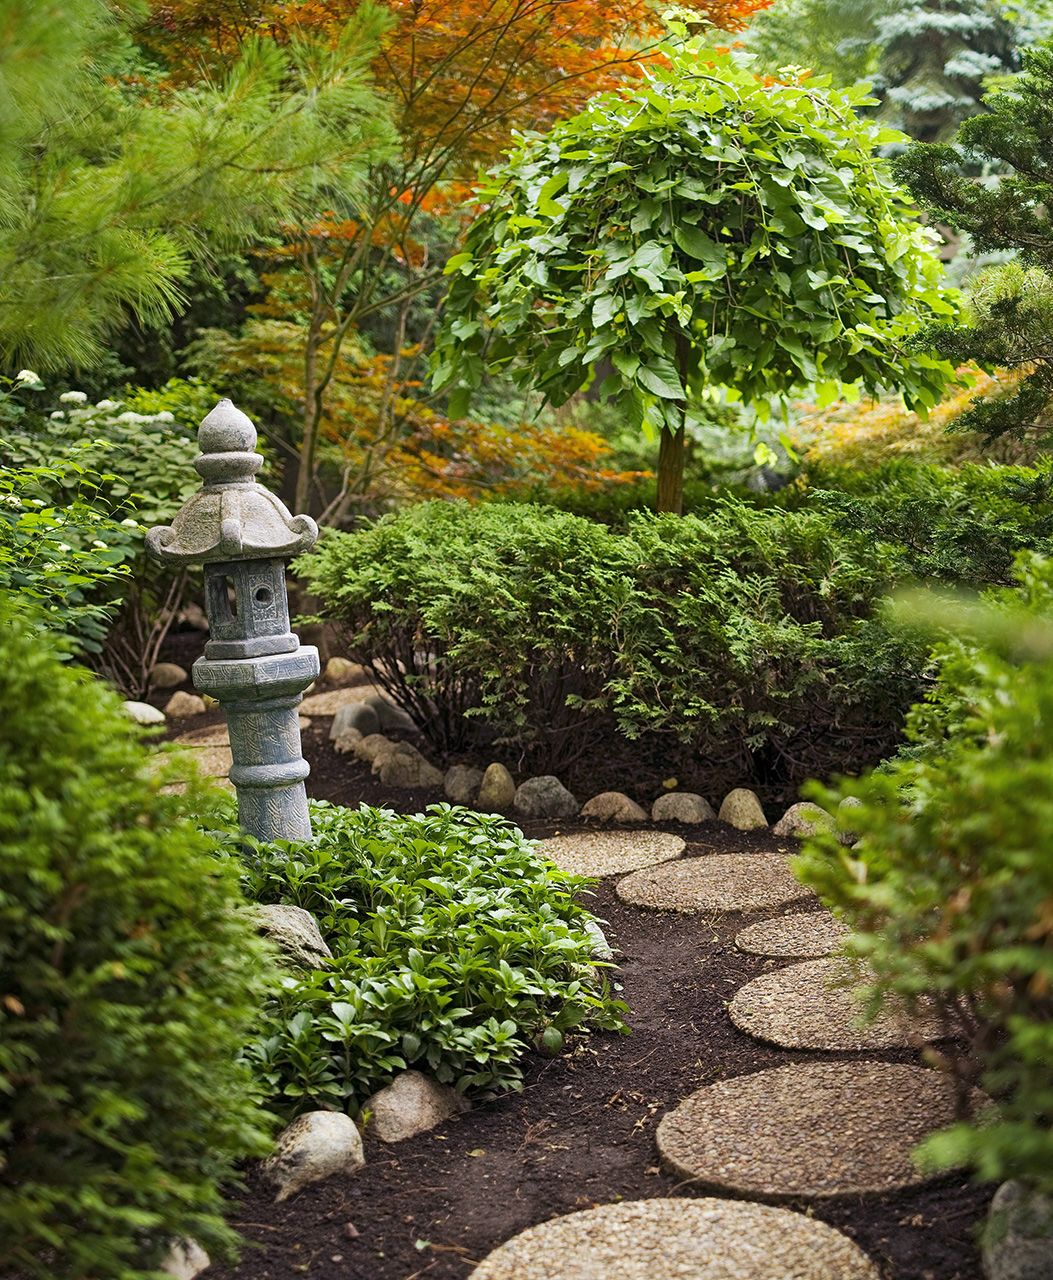 Authentic Japanese Garden Design, Japanese Garden Design And Plants